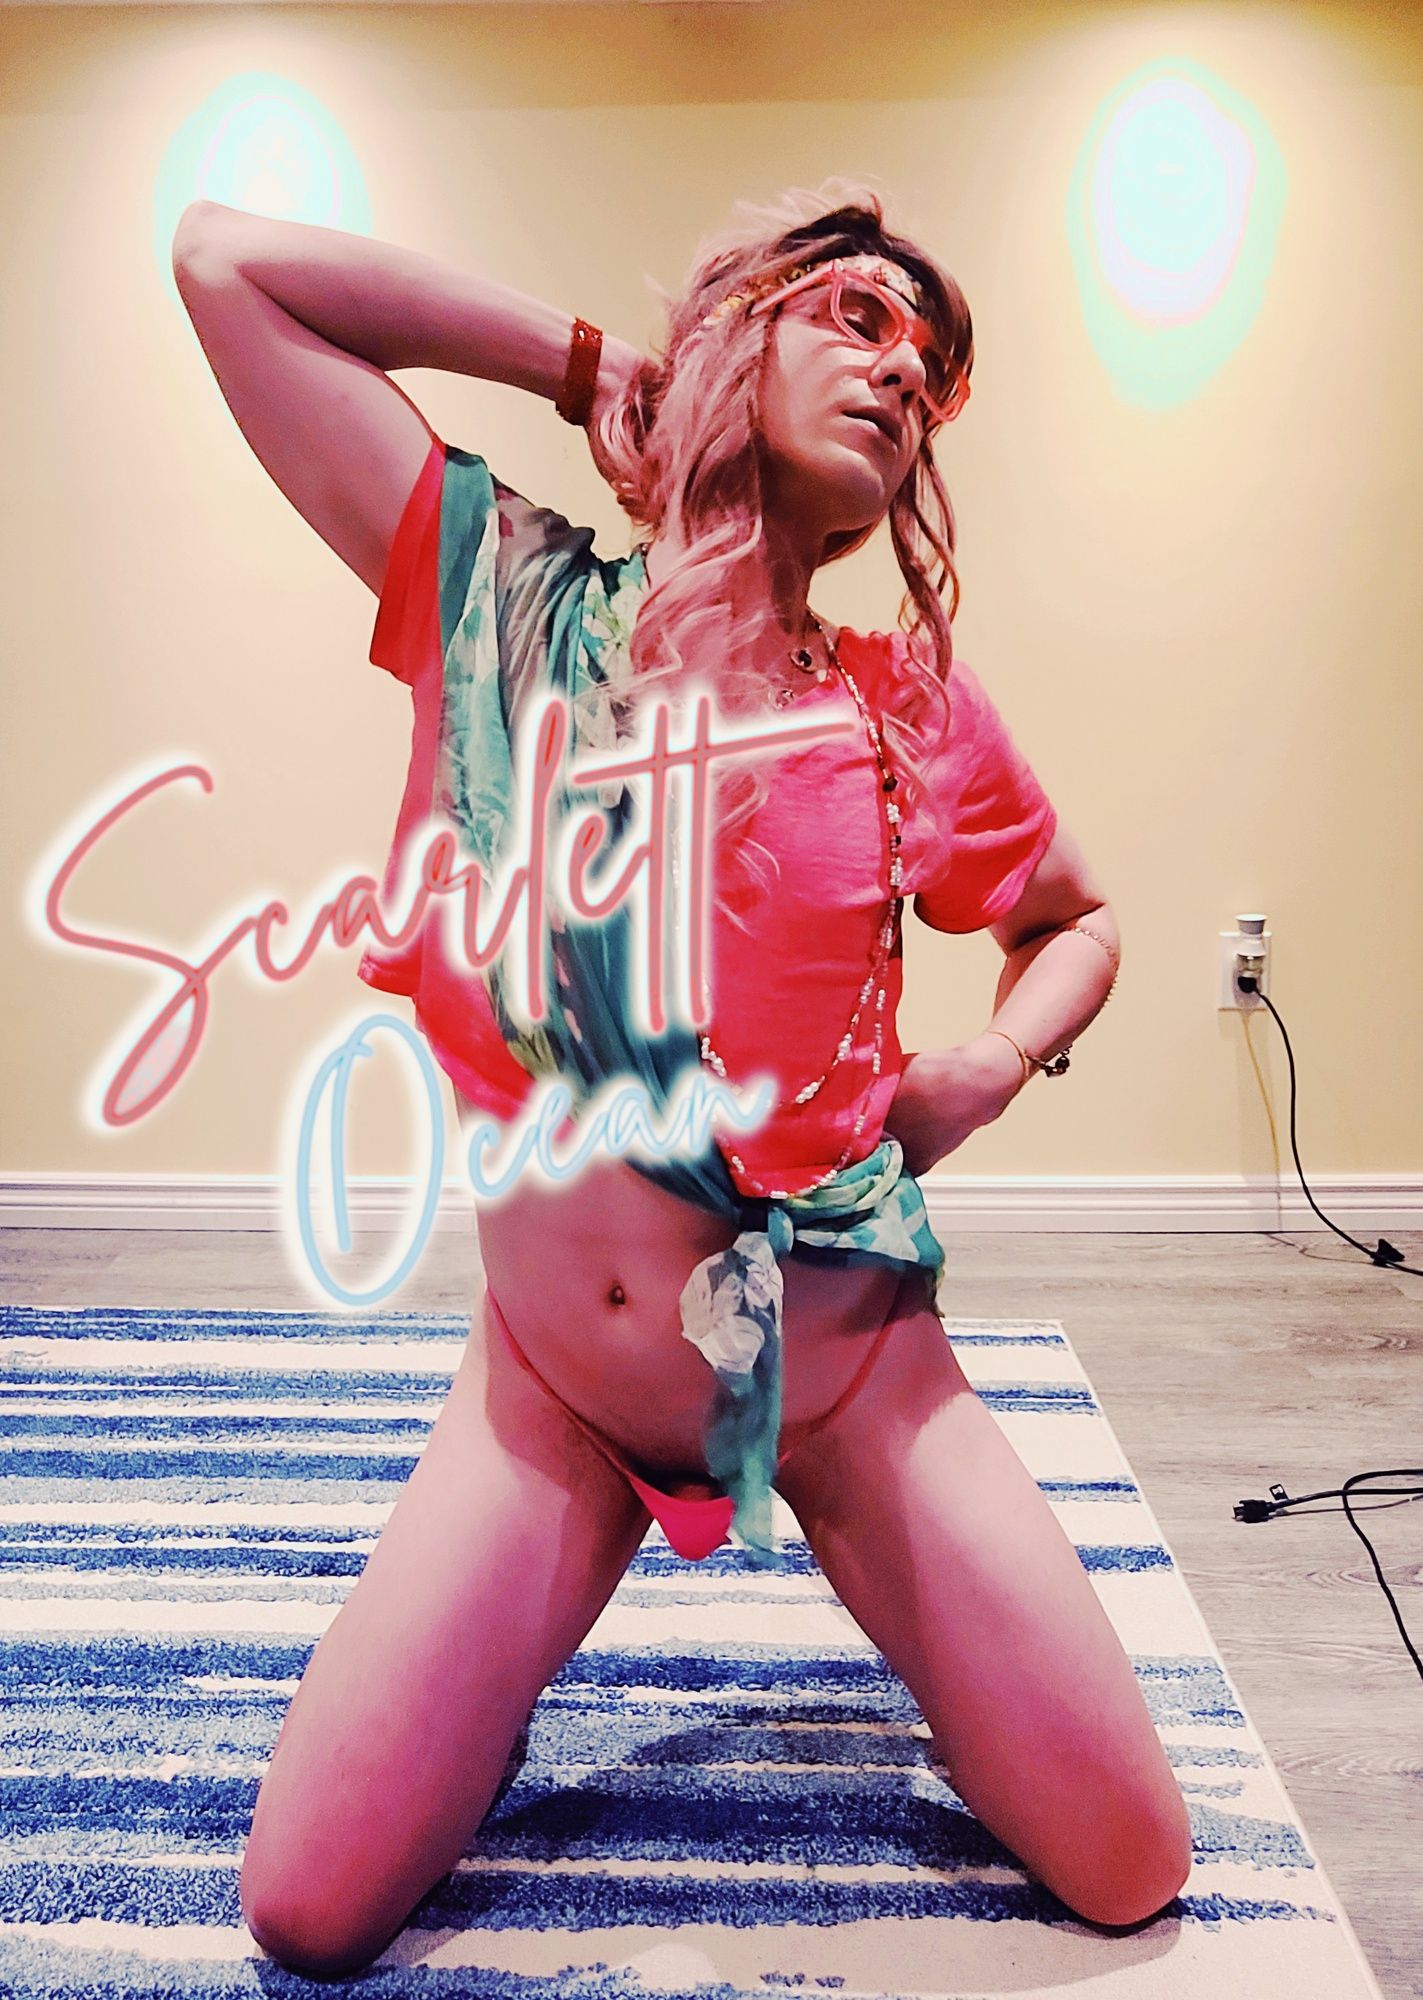 Scarlett Ocean - LIVE in COLOR #21